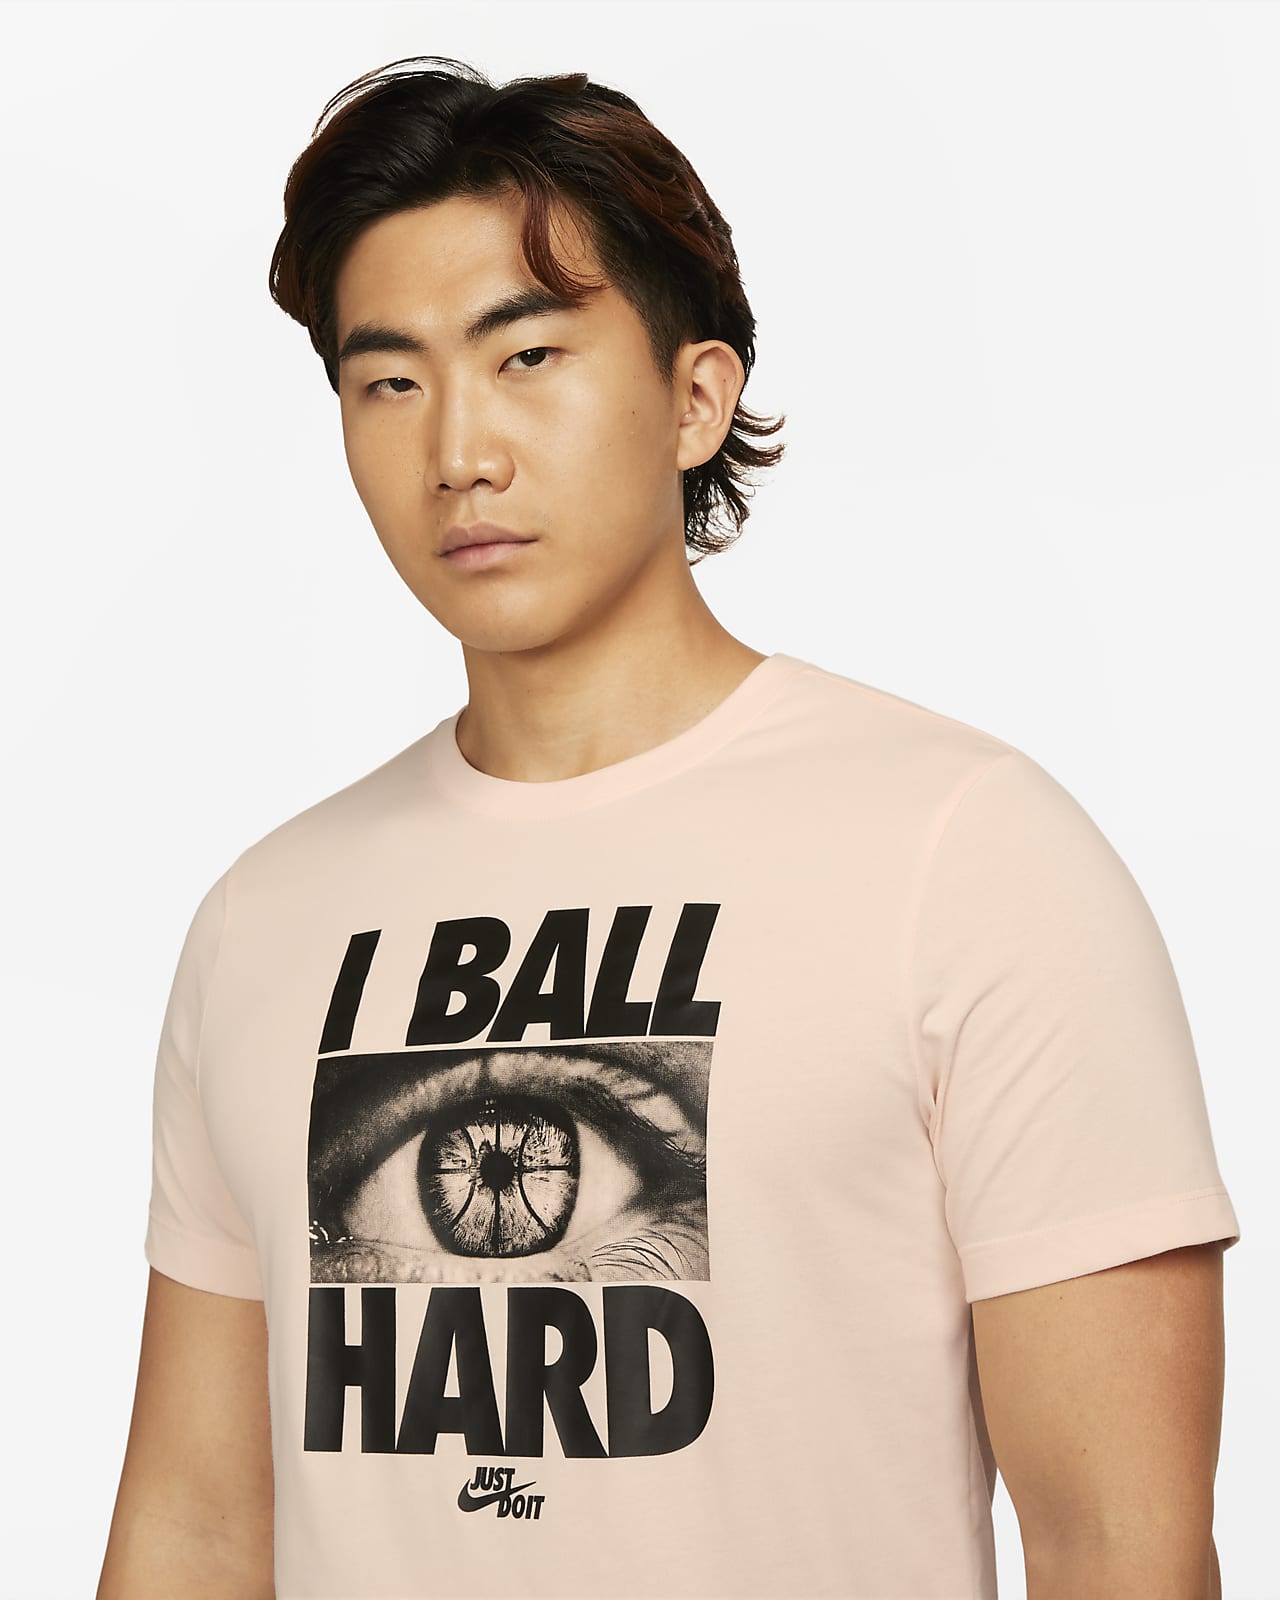 Nike Dri-FIT Men's 'Just Do It' Basketball T-Shirt